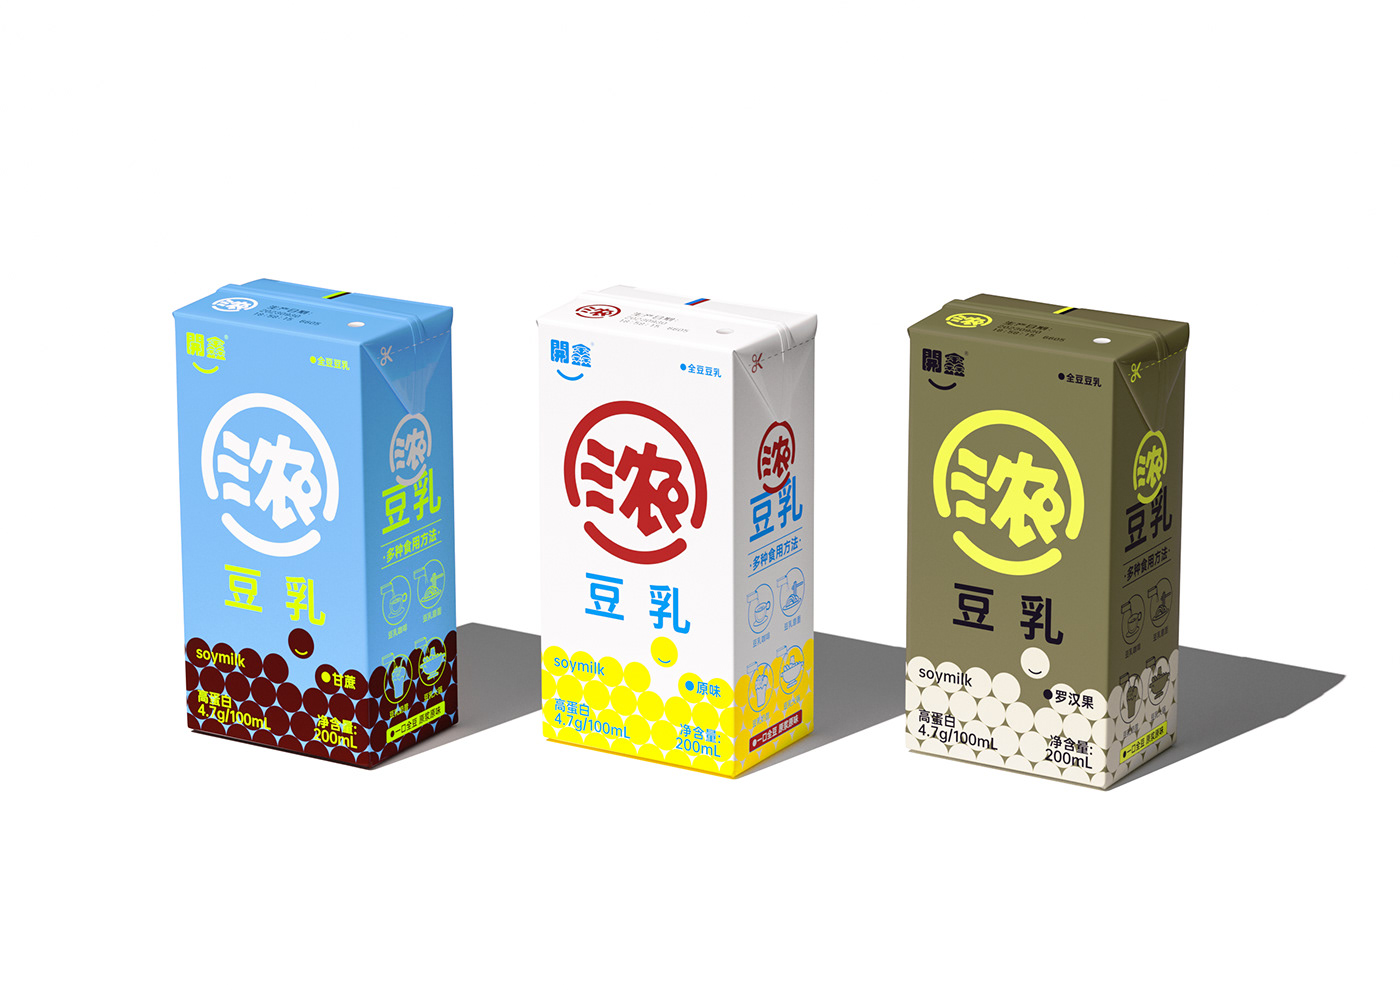 Packaging packaging design brand identity Branding design brand drinking milk logo package product